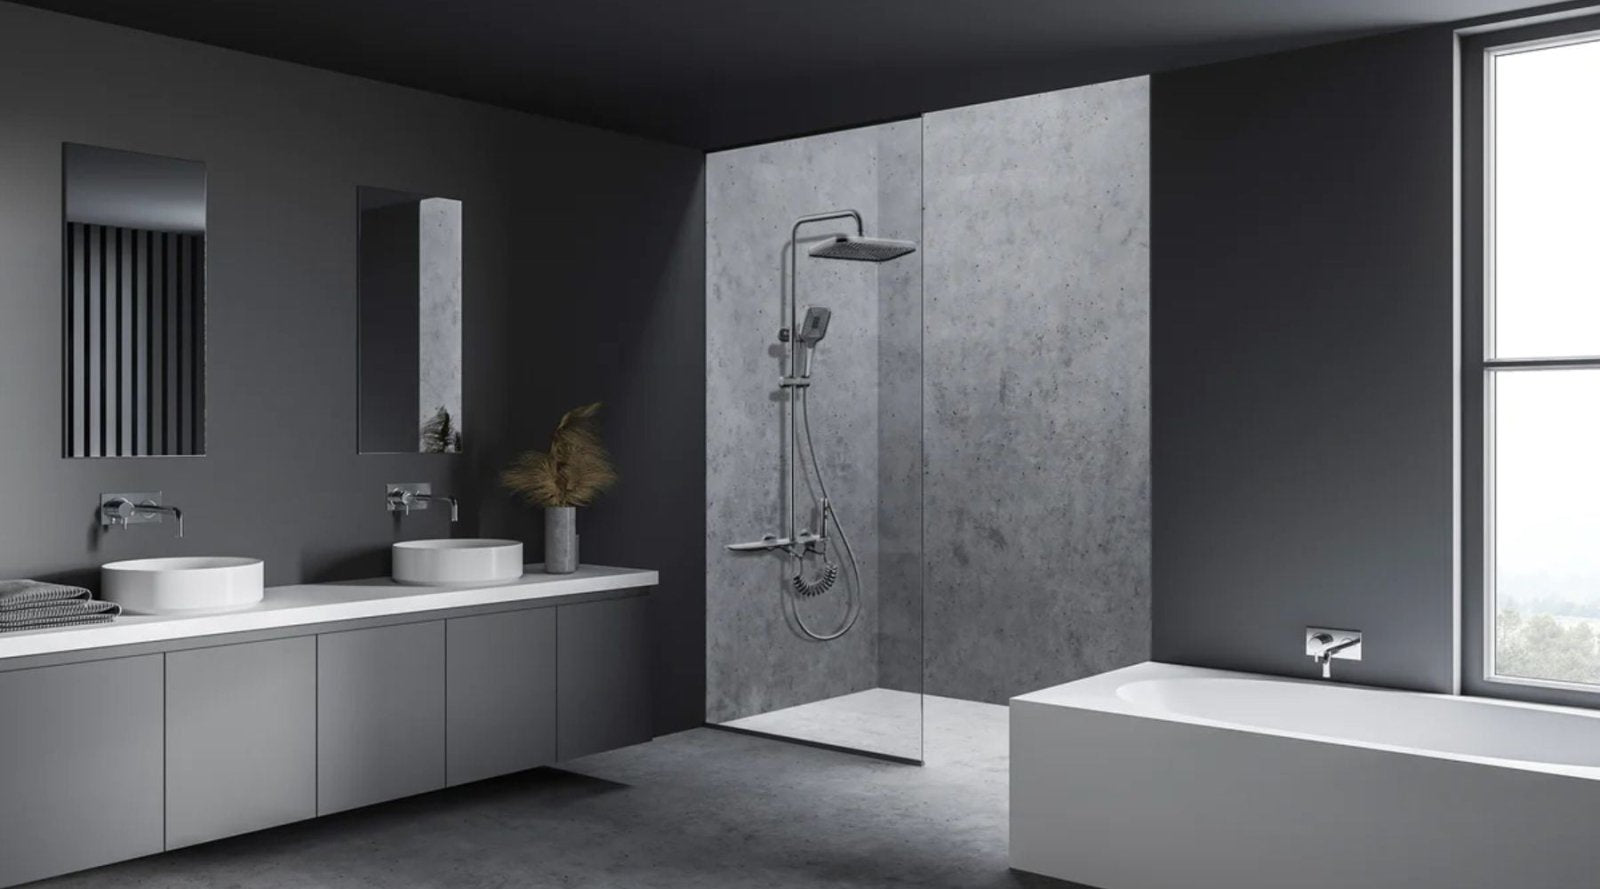 Top 10 Design Ideas For Small Bathroom Remodel - Lefton Home